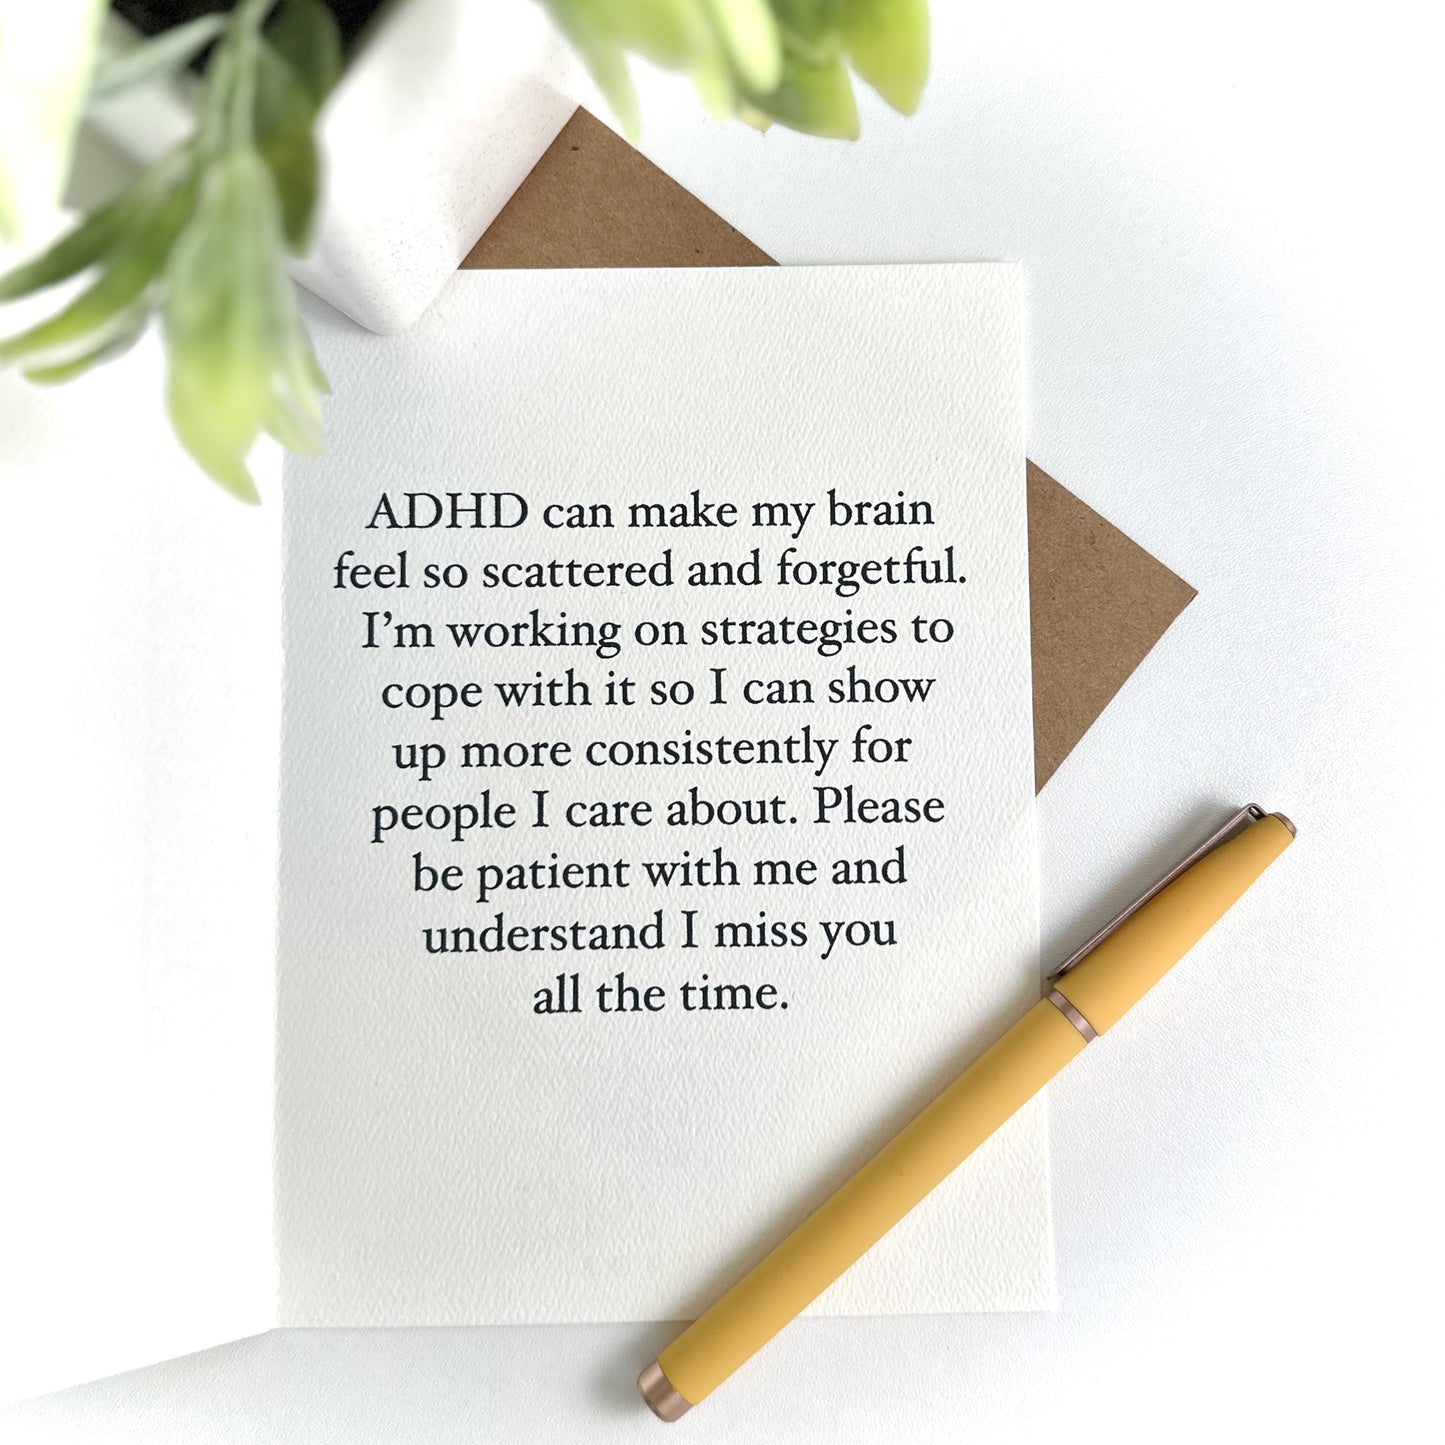 ADHD Apology and Sympathy Greeting Card